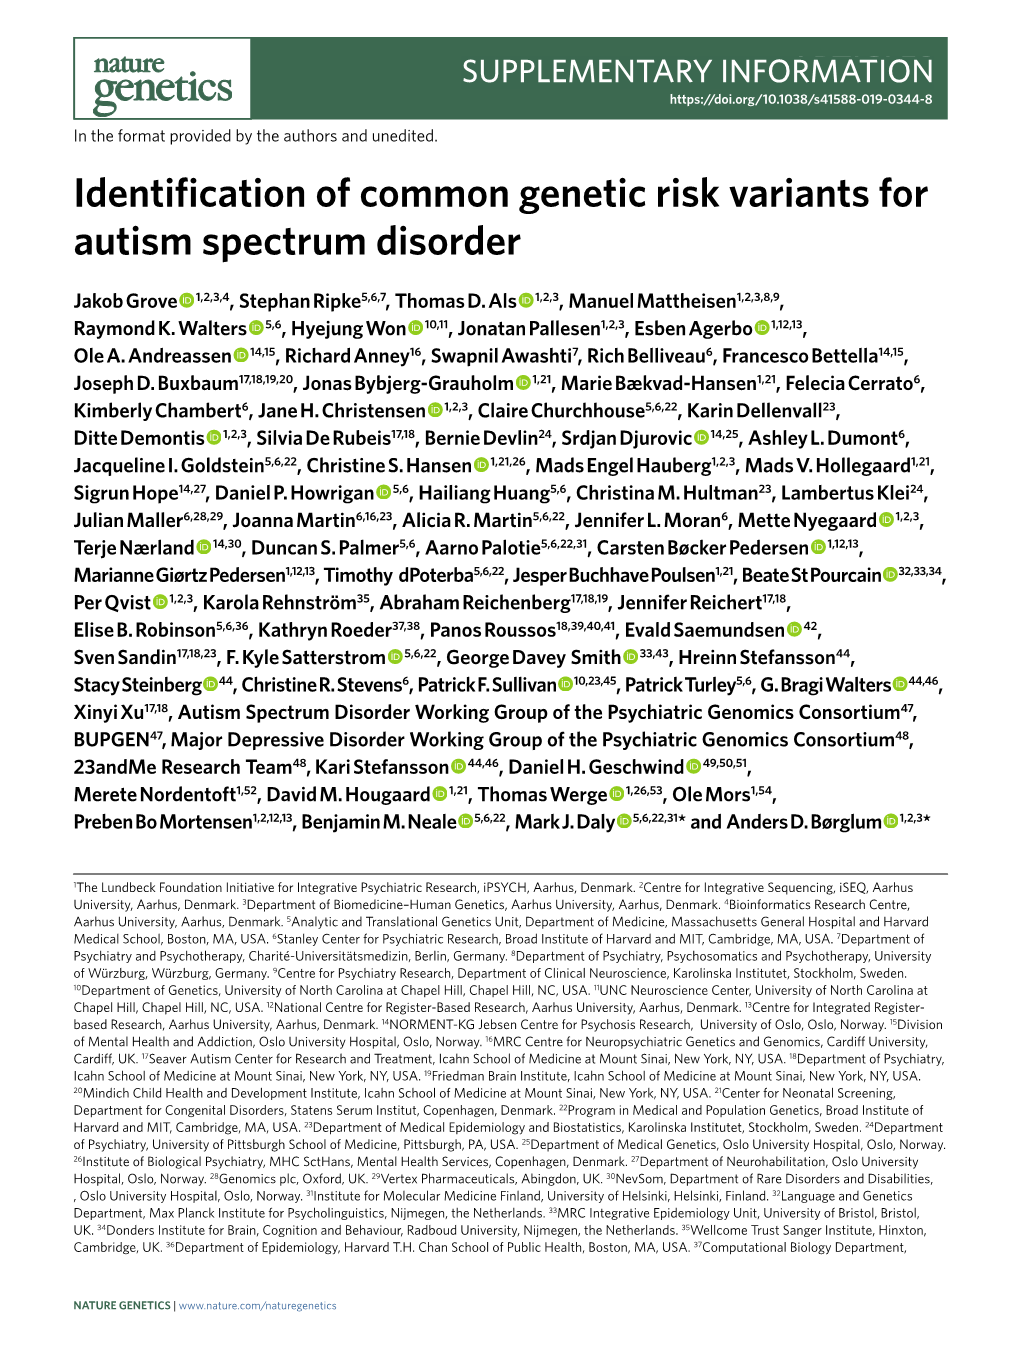 Identification of Common Genetic Risk Variants for Autism Spectrum Disorder